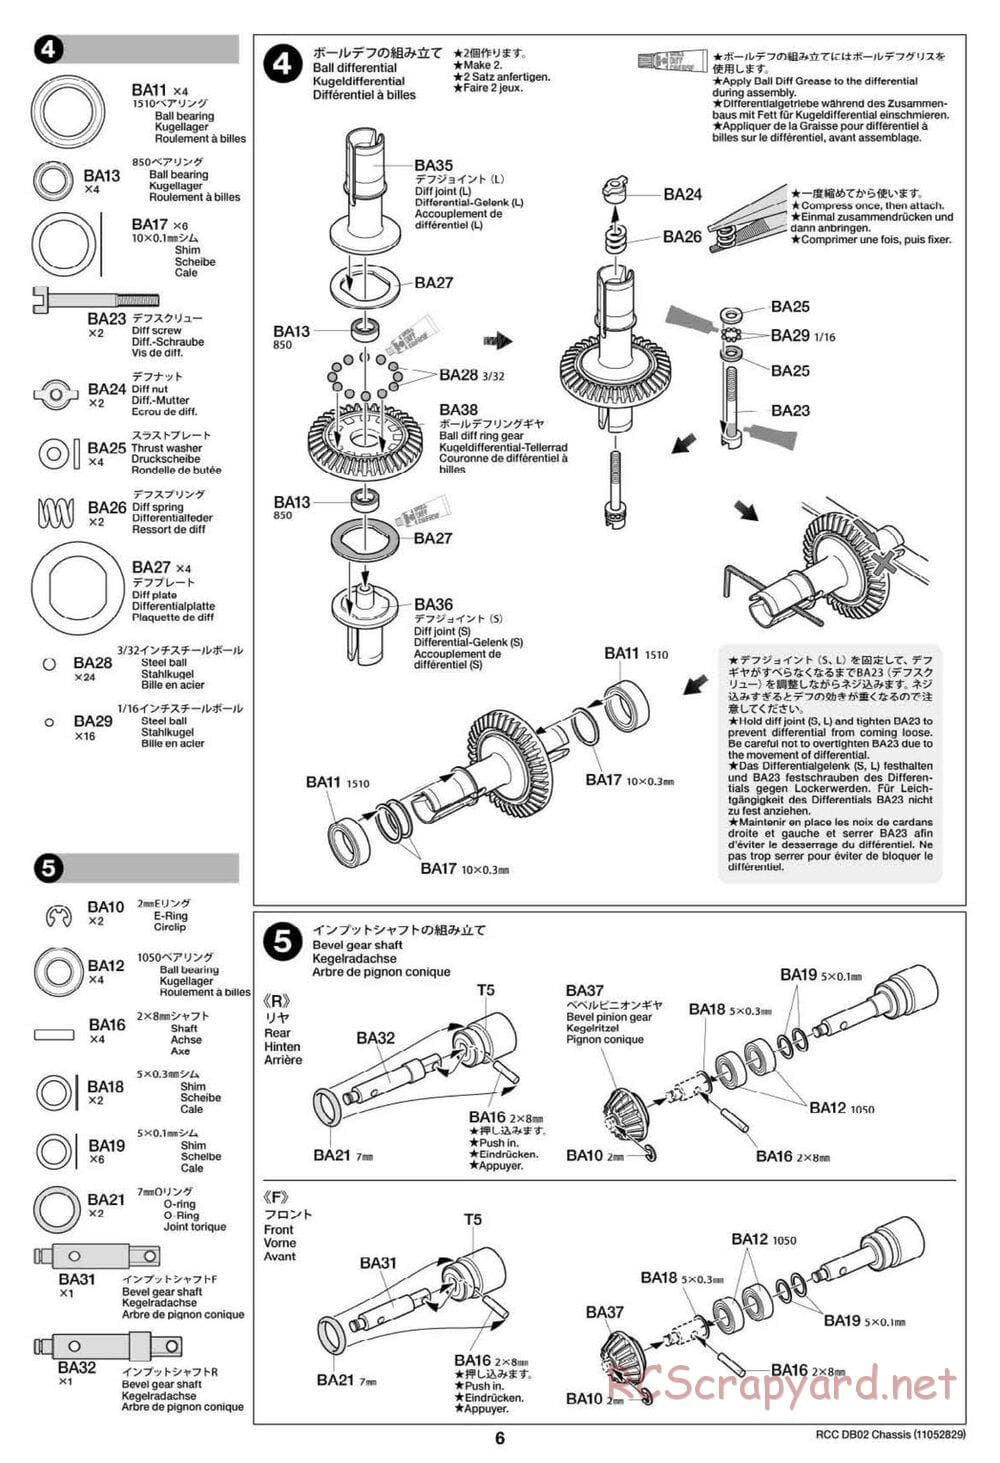 Tamiya - Leonis - DB-02 Chassis - Manual - Page 6